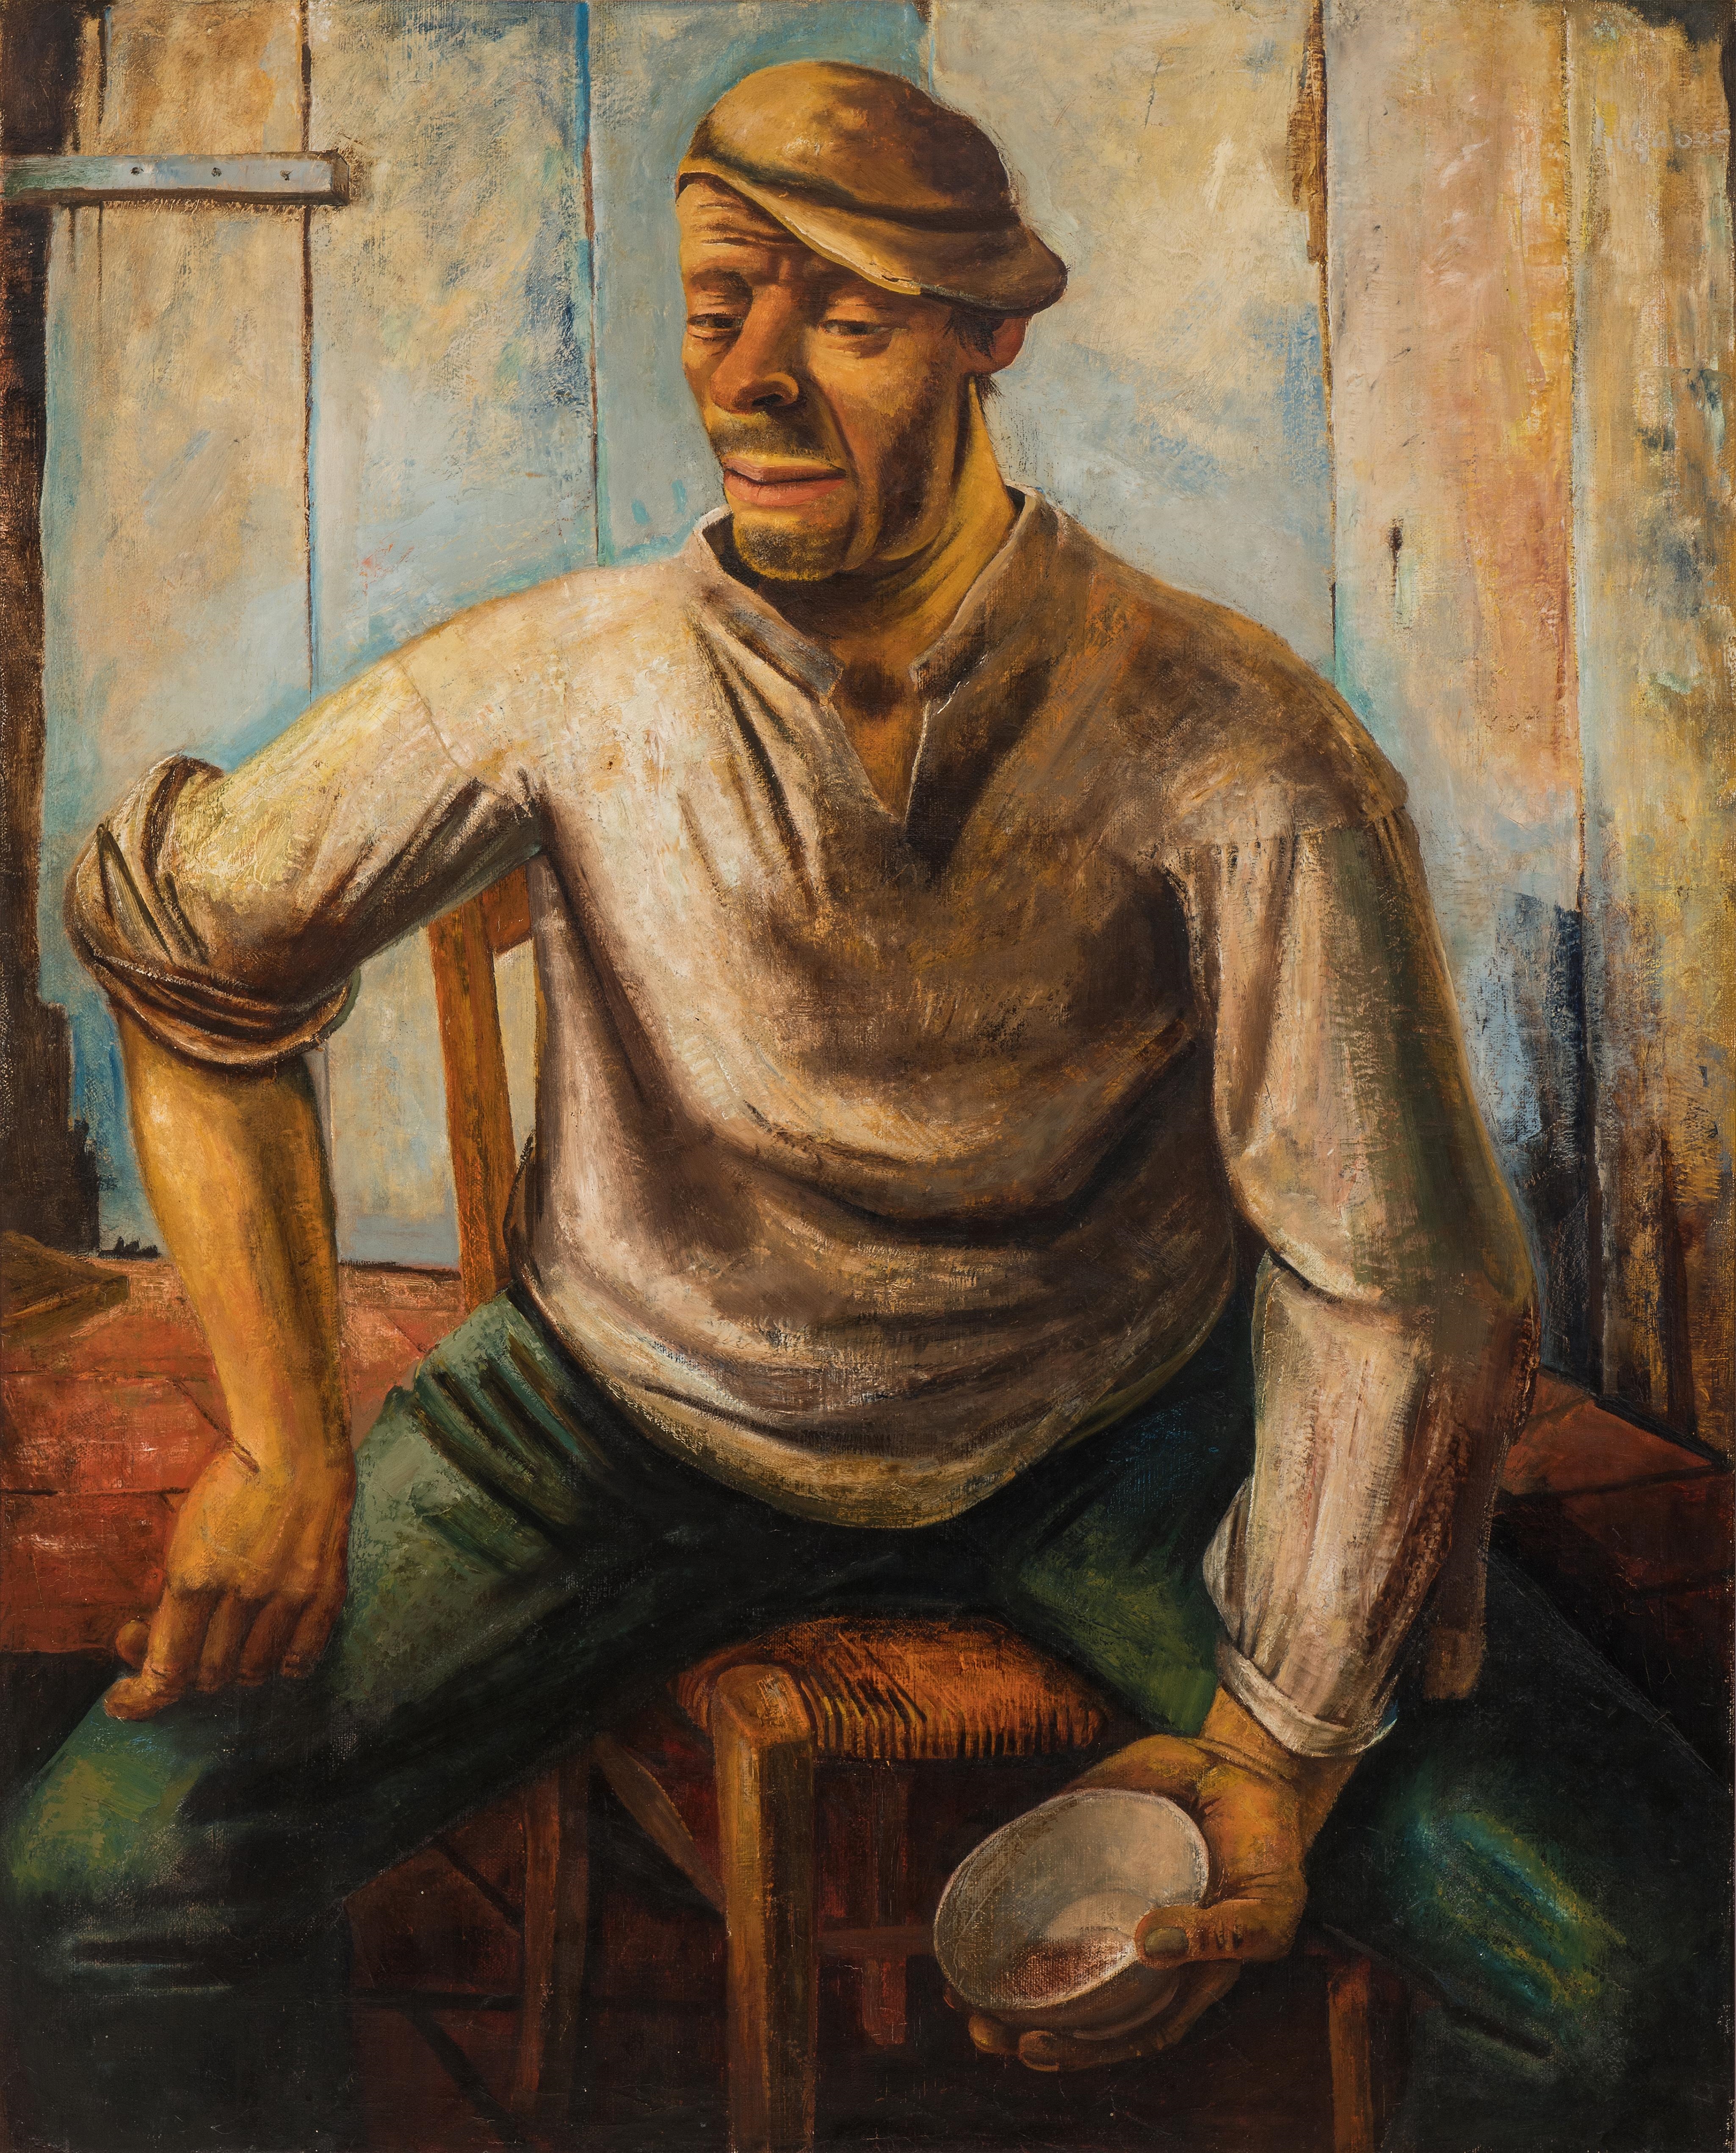 Rustende boer met kom [Resting farmer holding a cup] by Hendrik Chabot